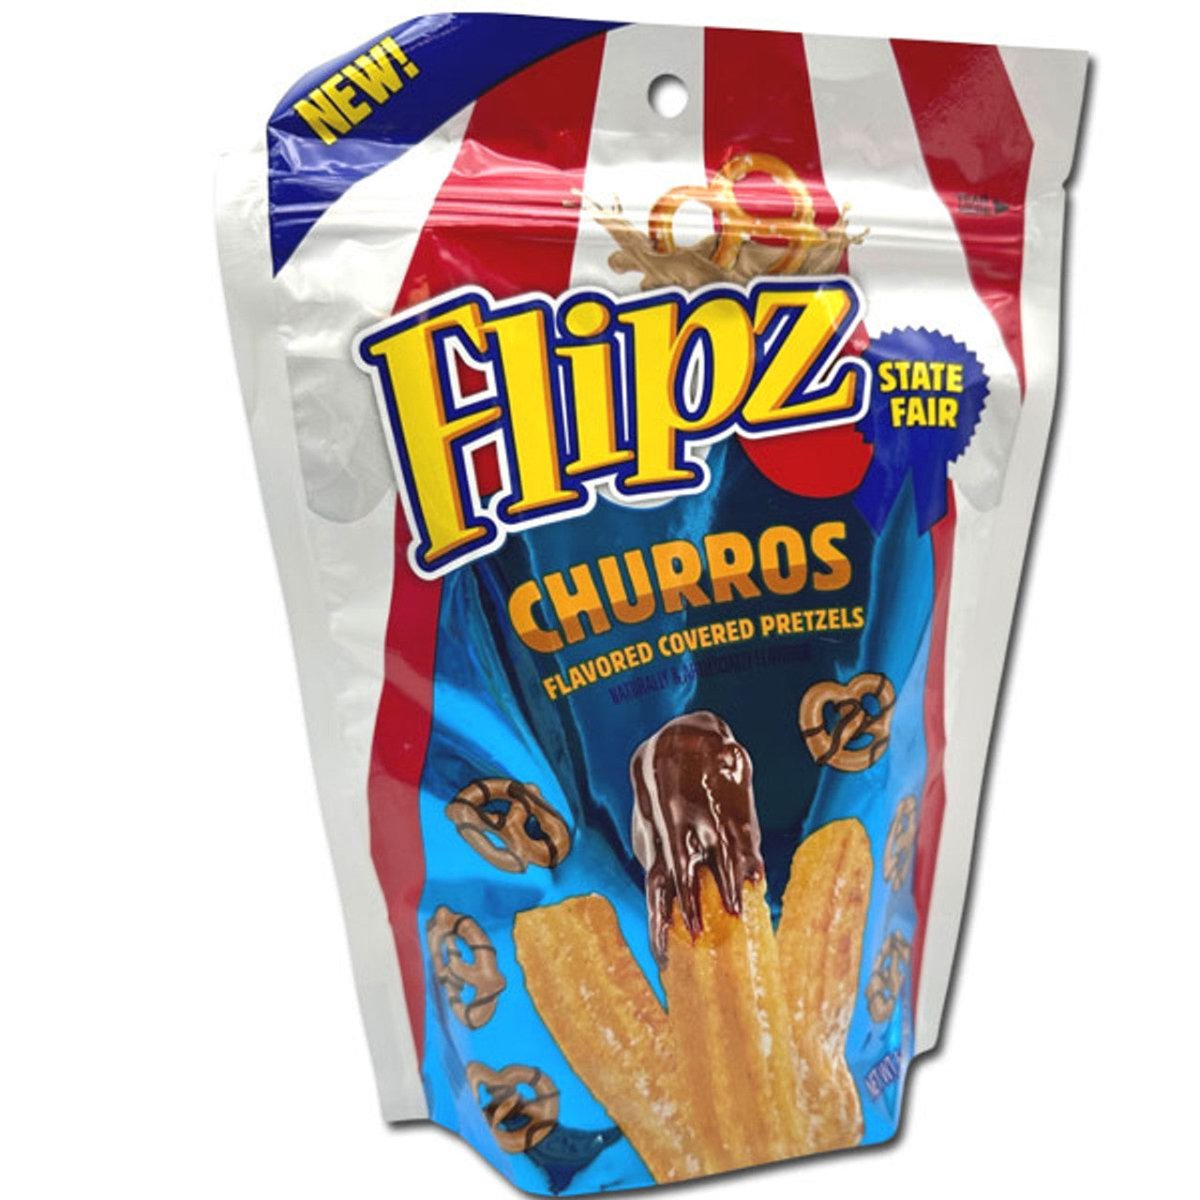 Flipz Churros Flavoured covered Pretzels 184g - Candy Mail UK